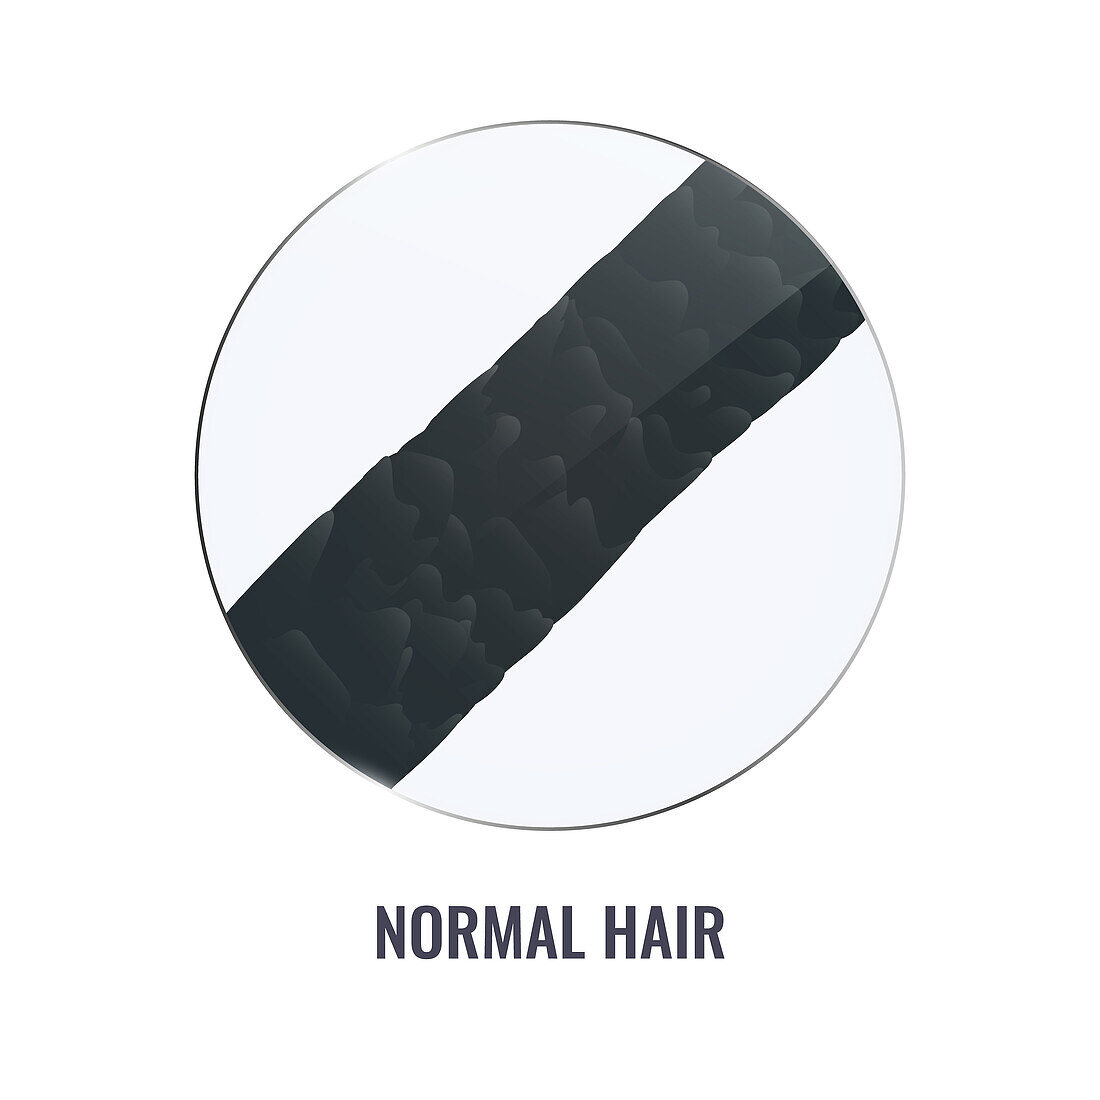 Healthy hair surface, conceptual illustration